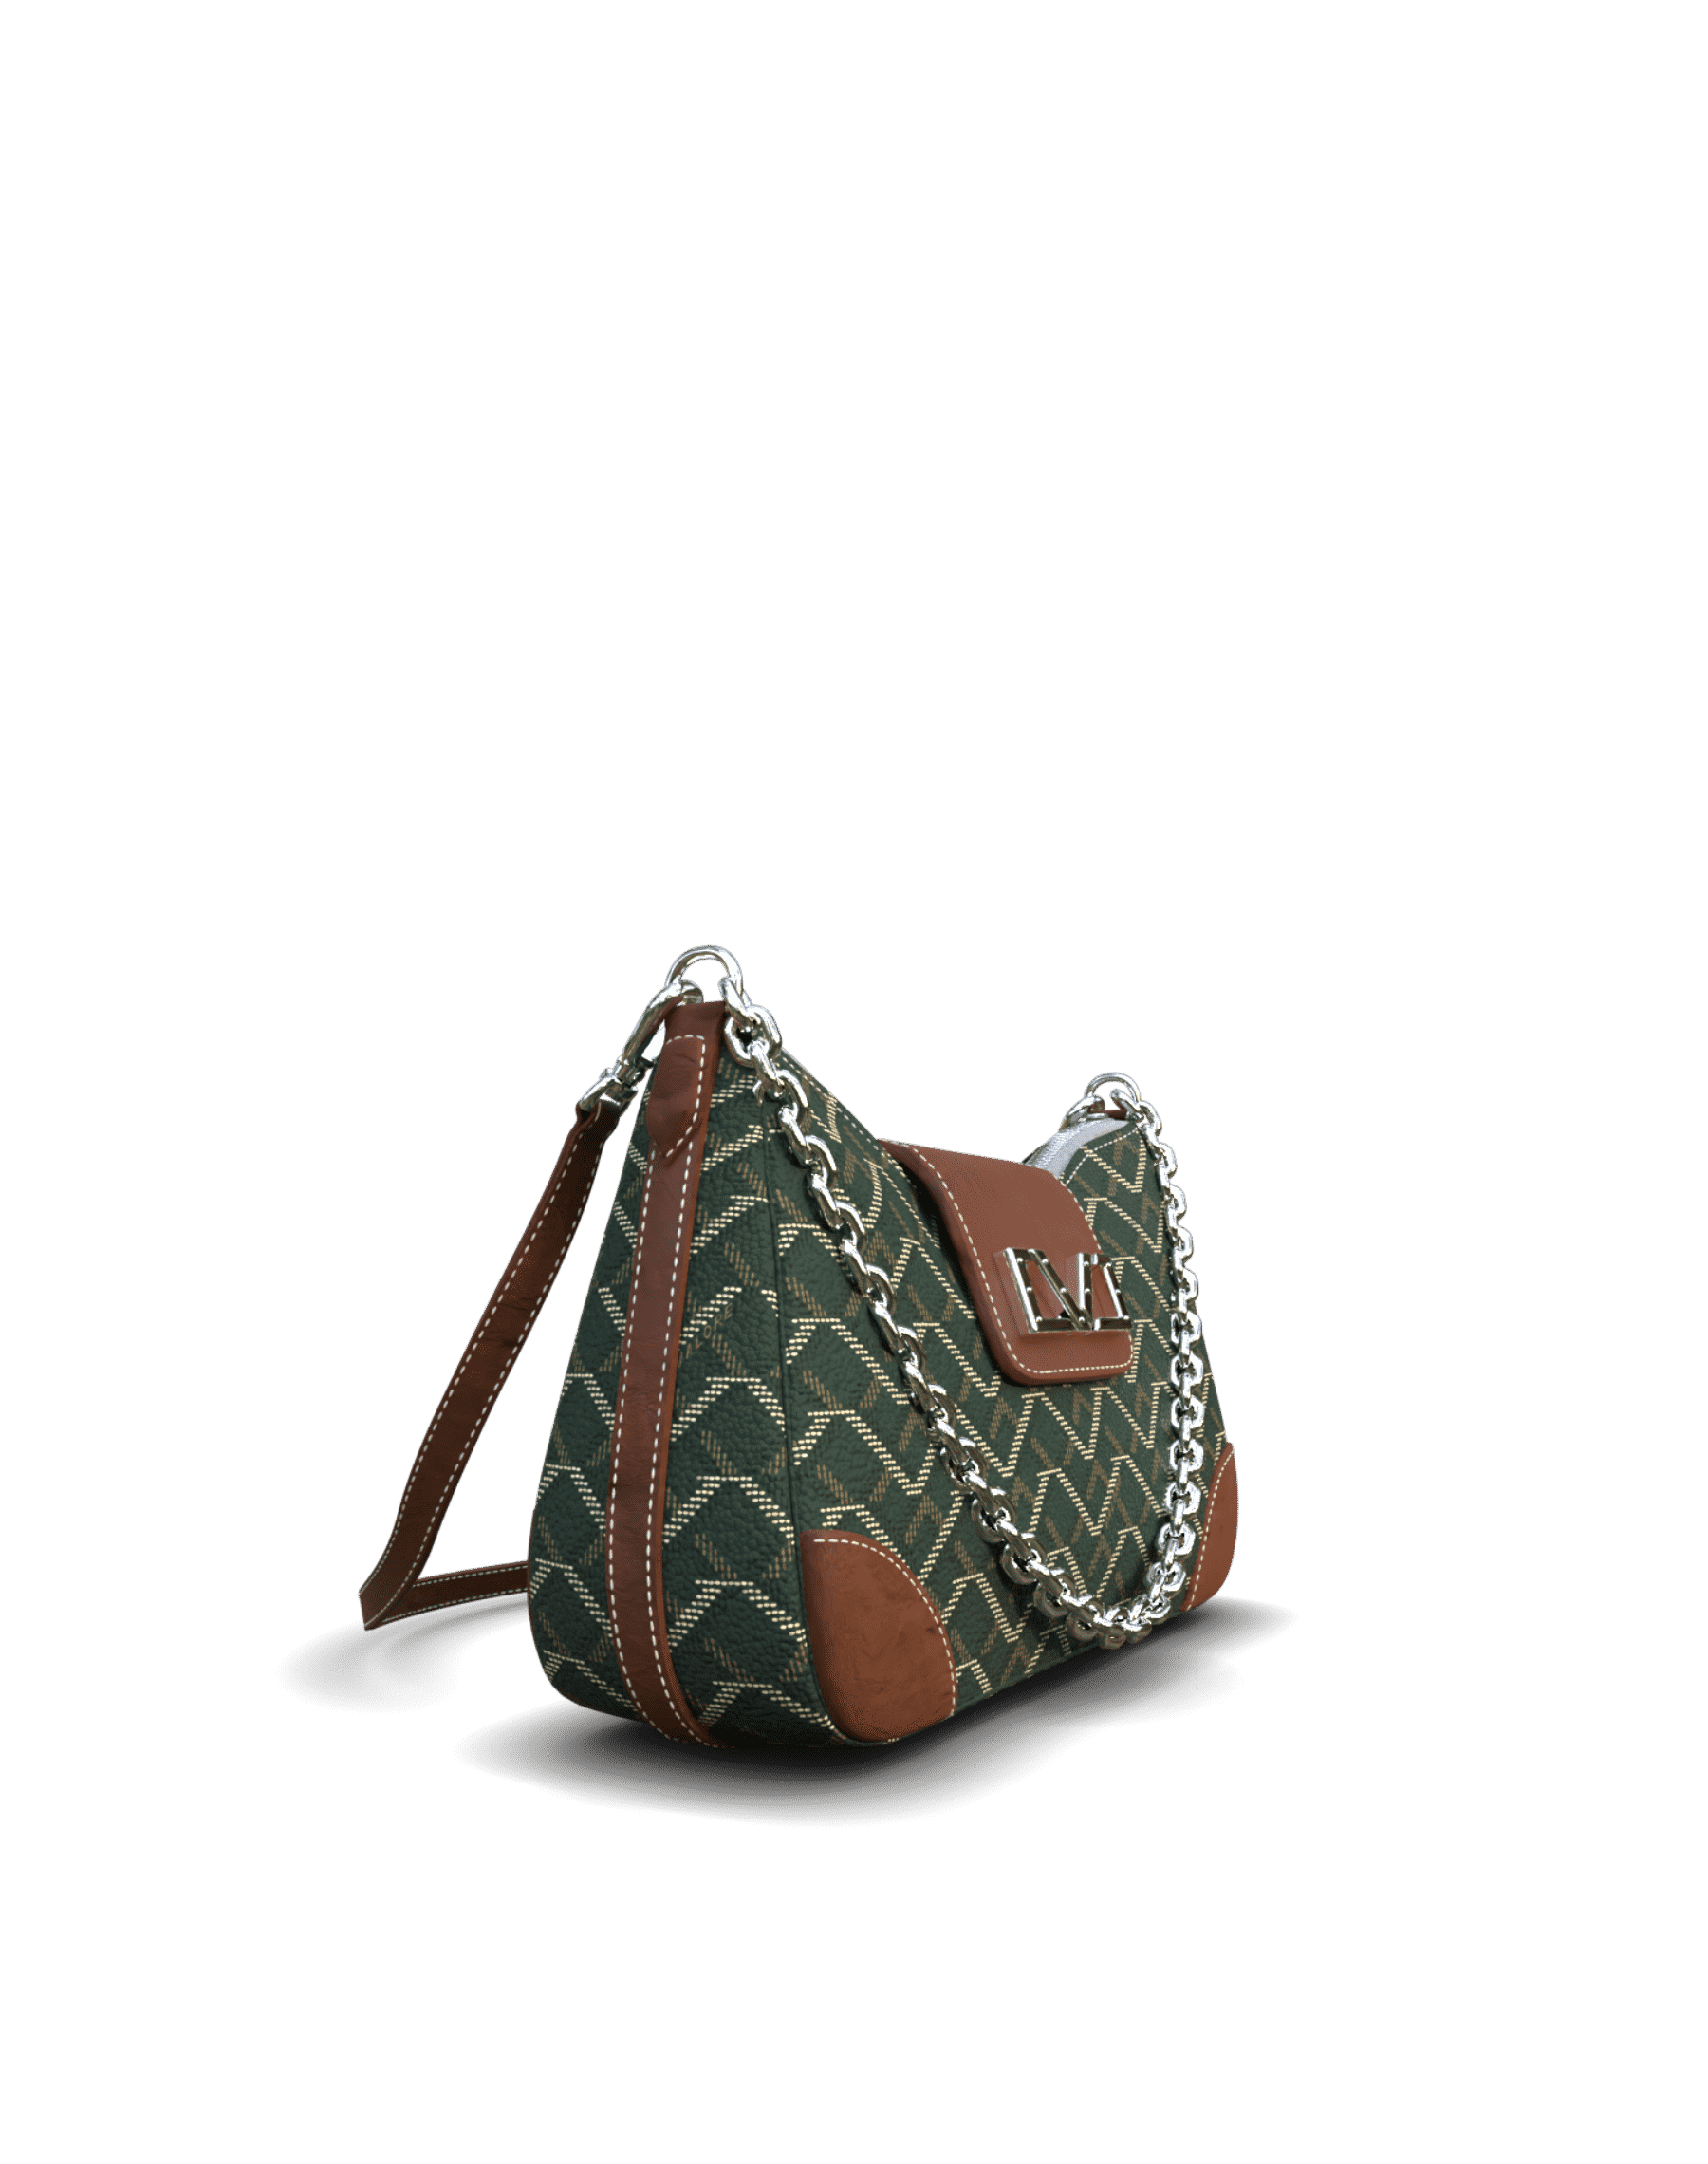 Delphi Bag image (Delphi Bag)